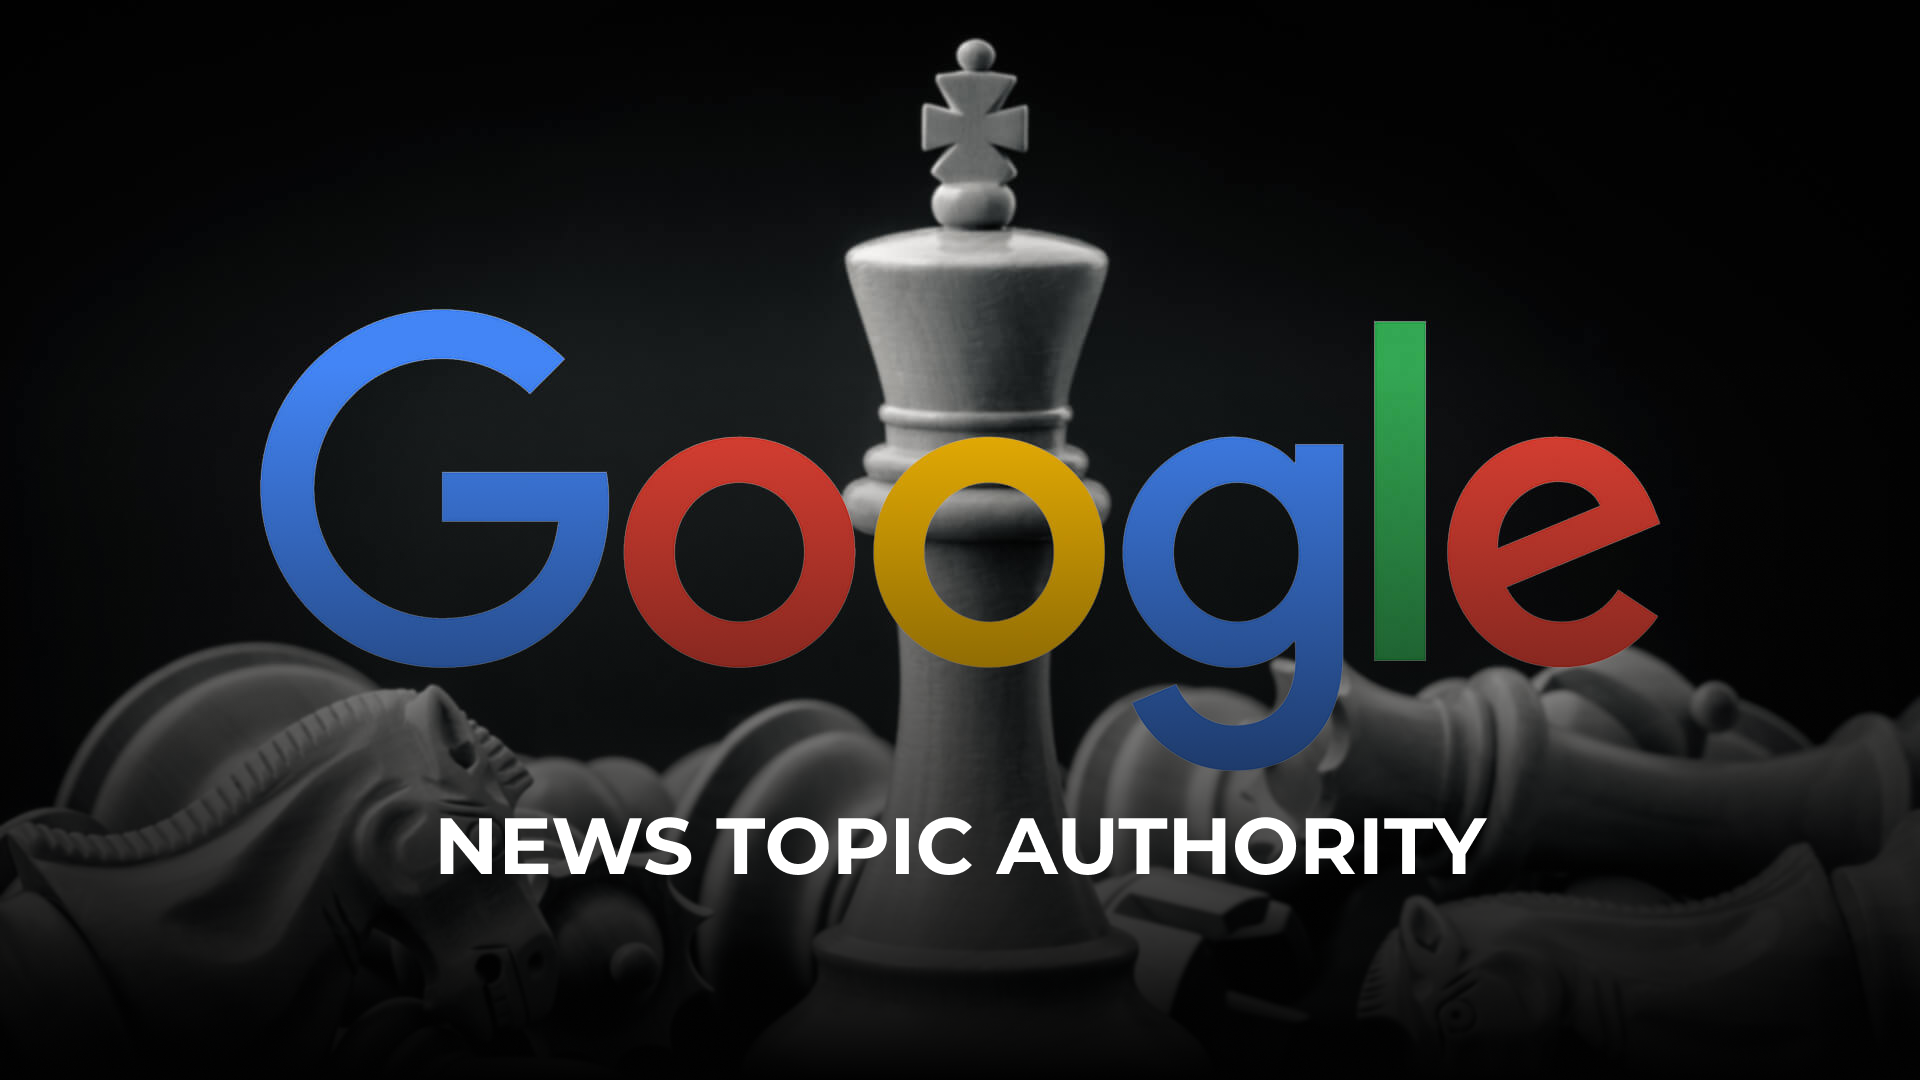 Understanding Google’s News Topic Authority